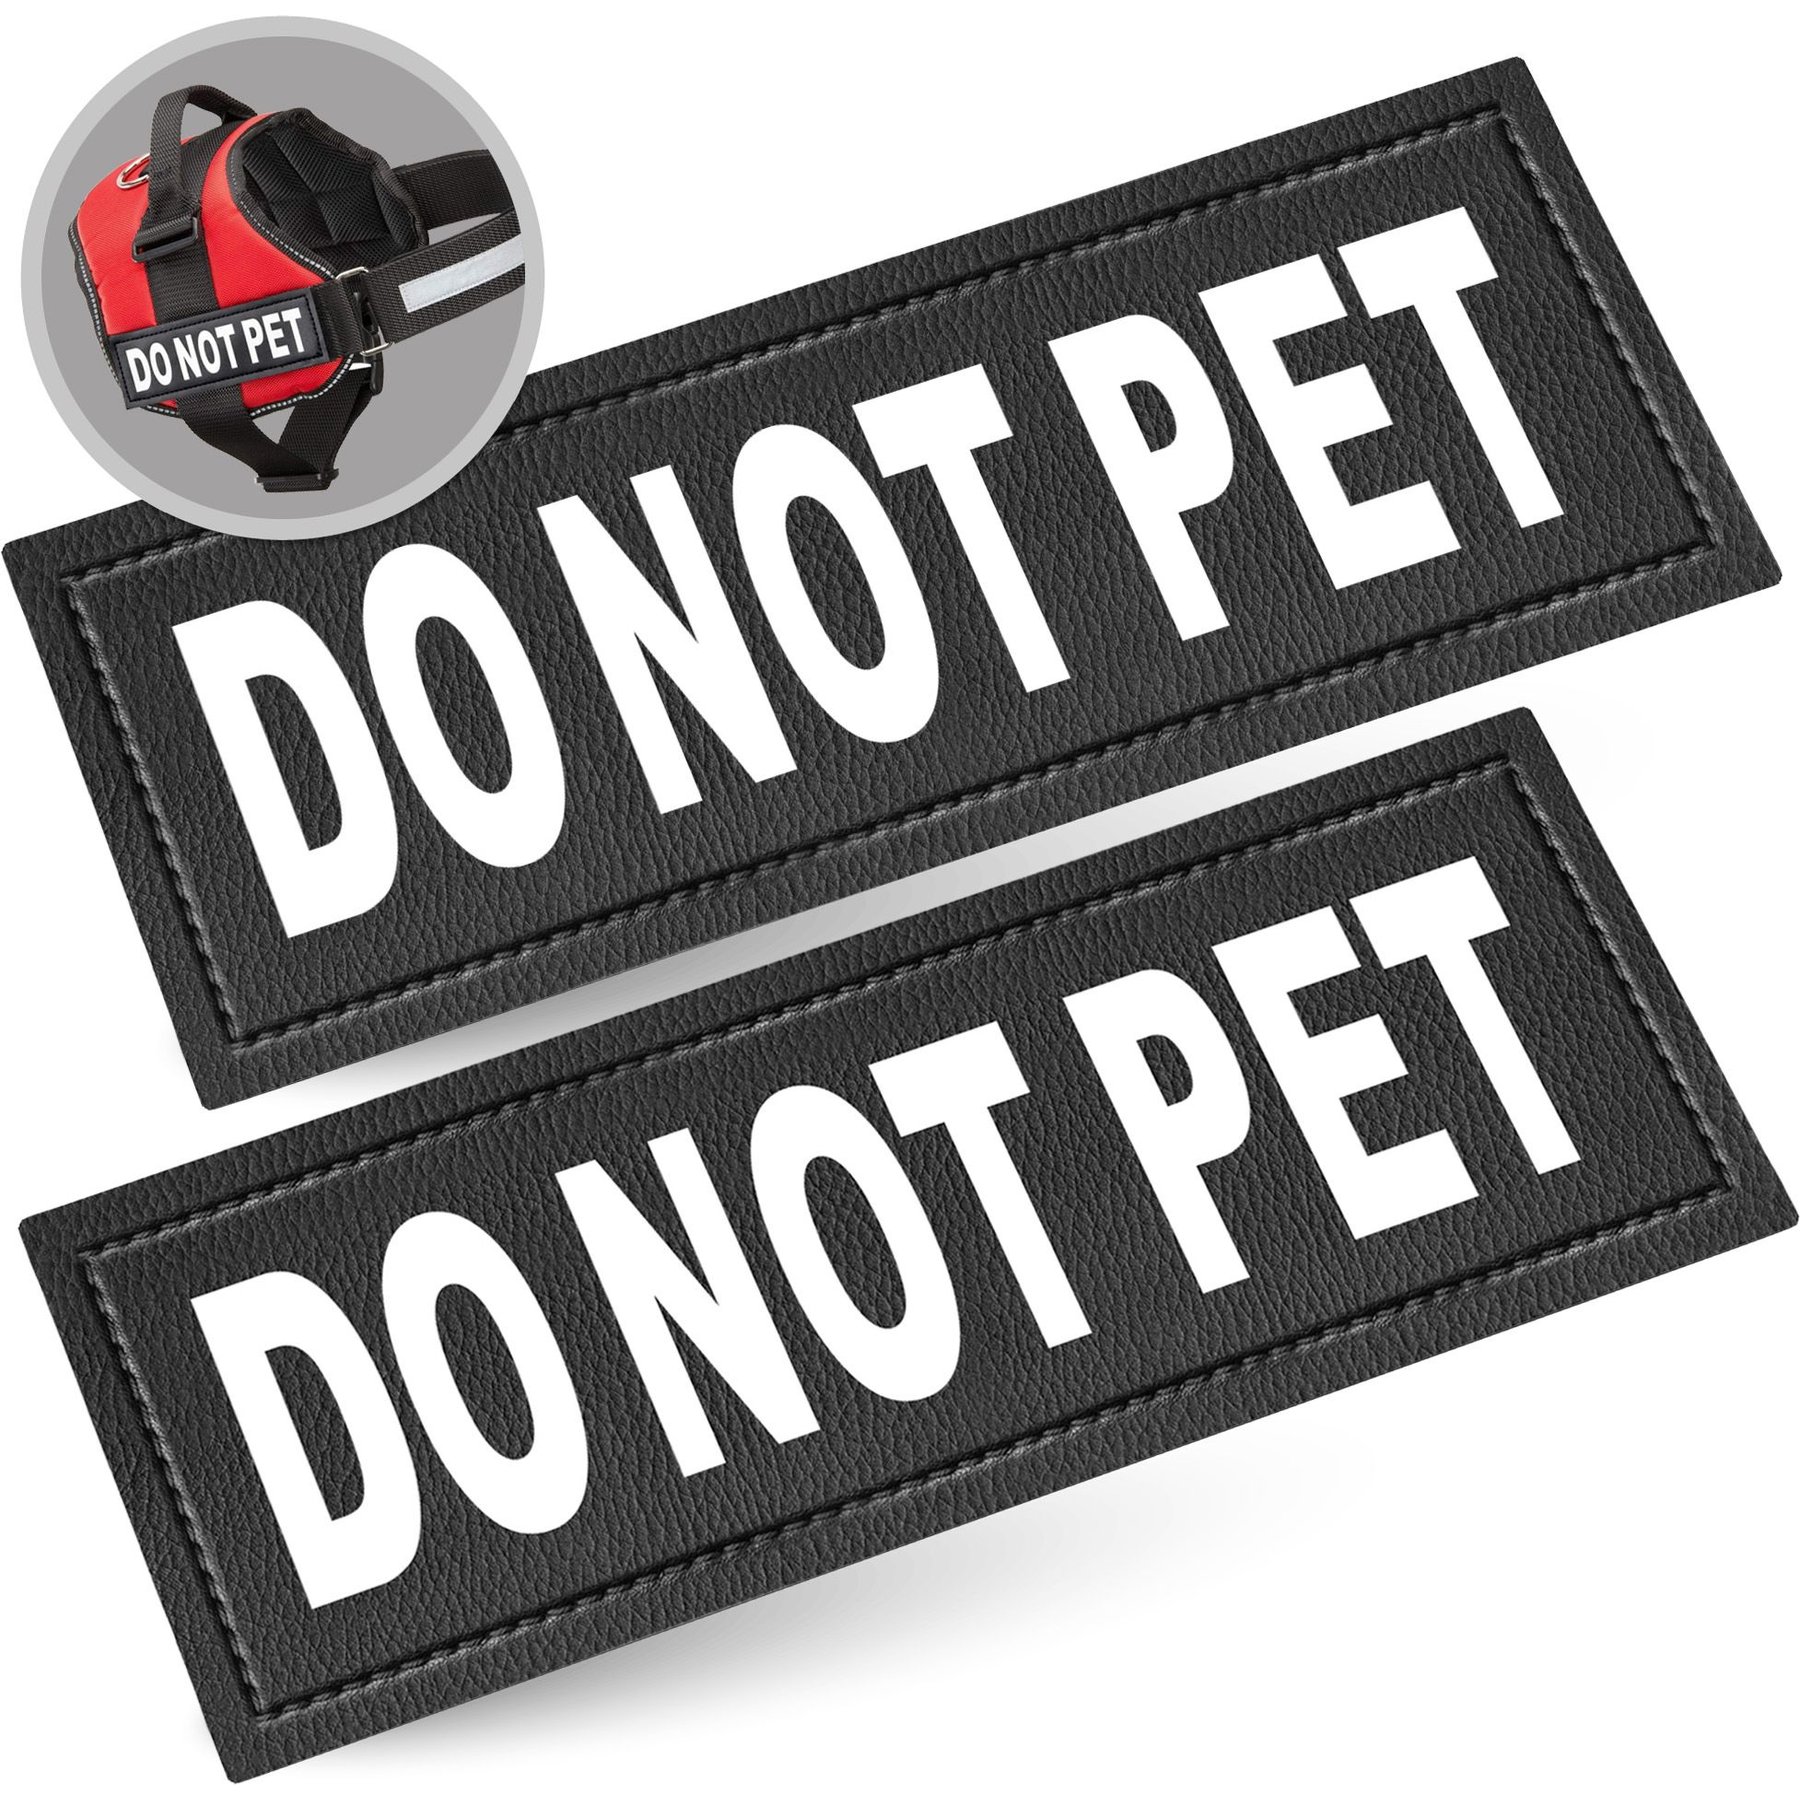 Service Dog Badge do not pet Patch Pet Training Dog Strap Hook